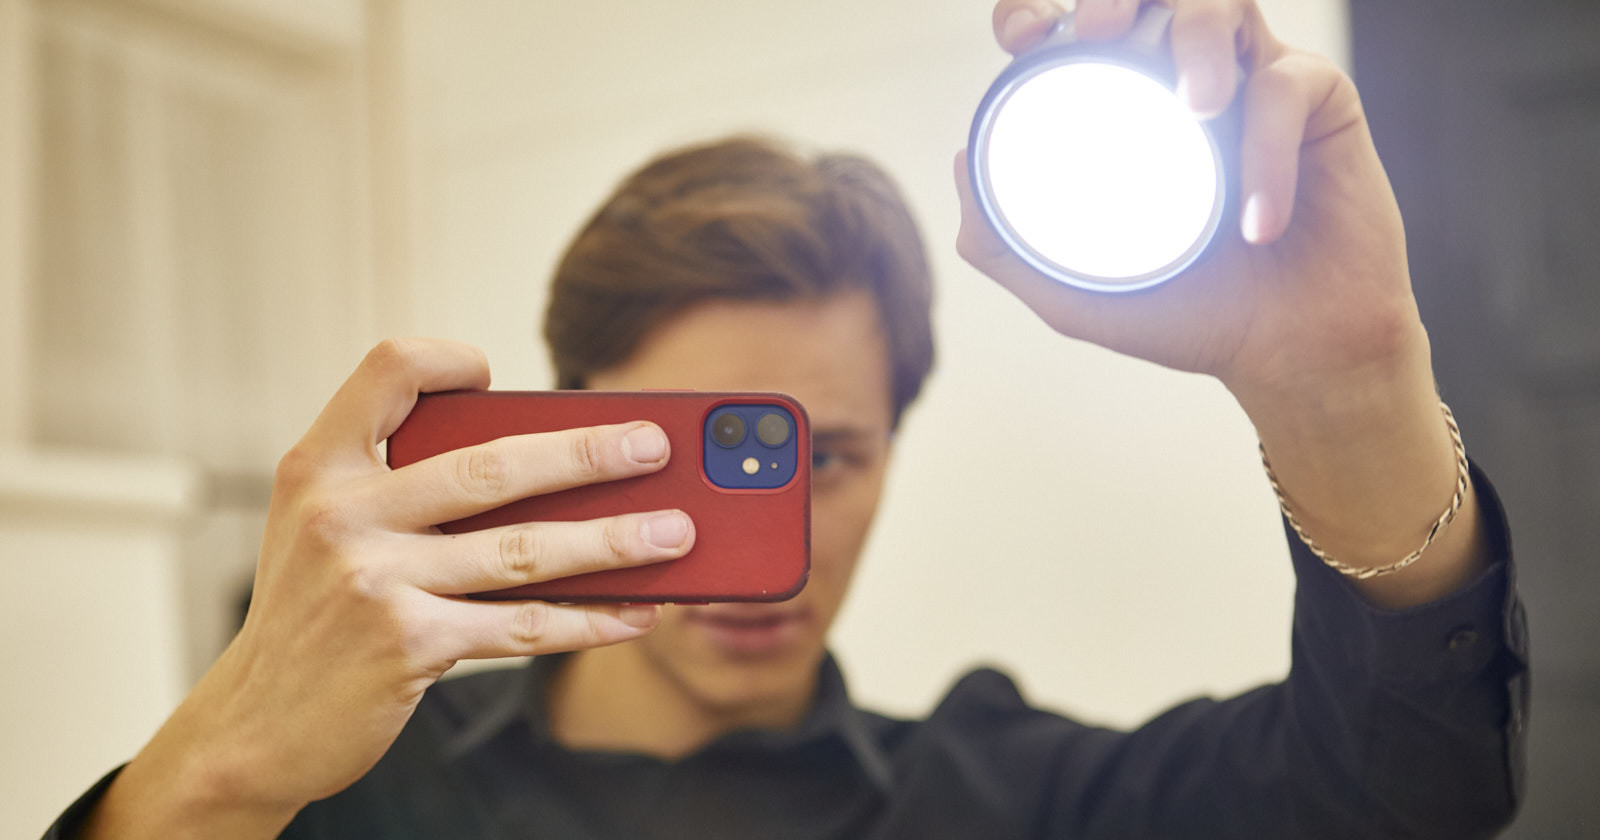 Profoto C1 Plus First Impressions: A Portable Studio Light for Smartphones